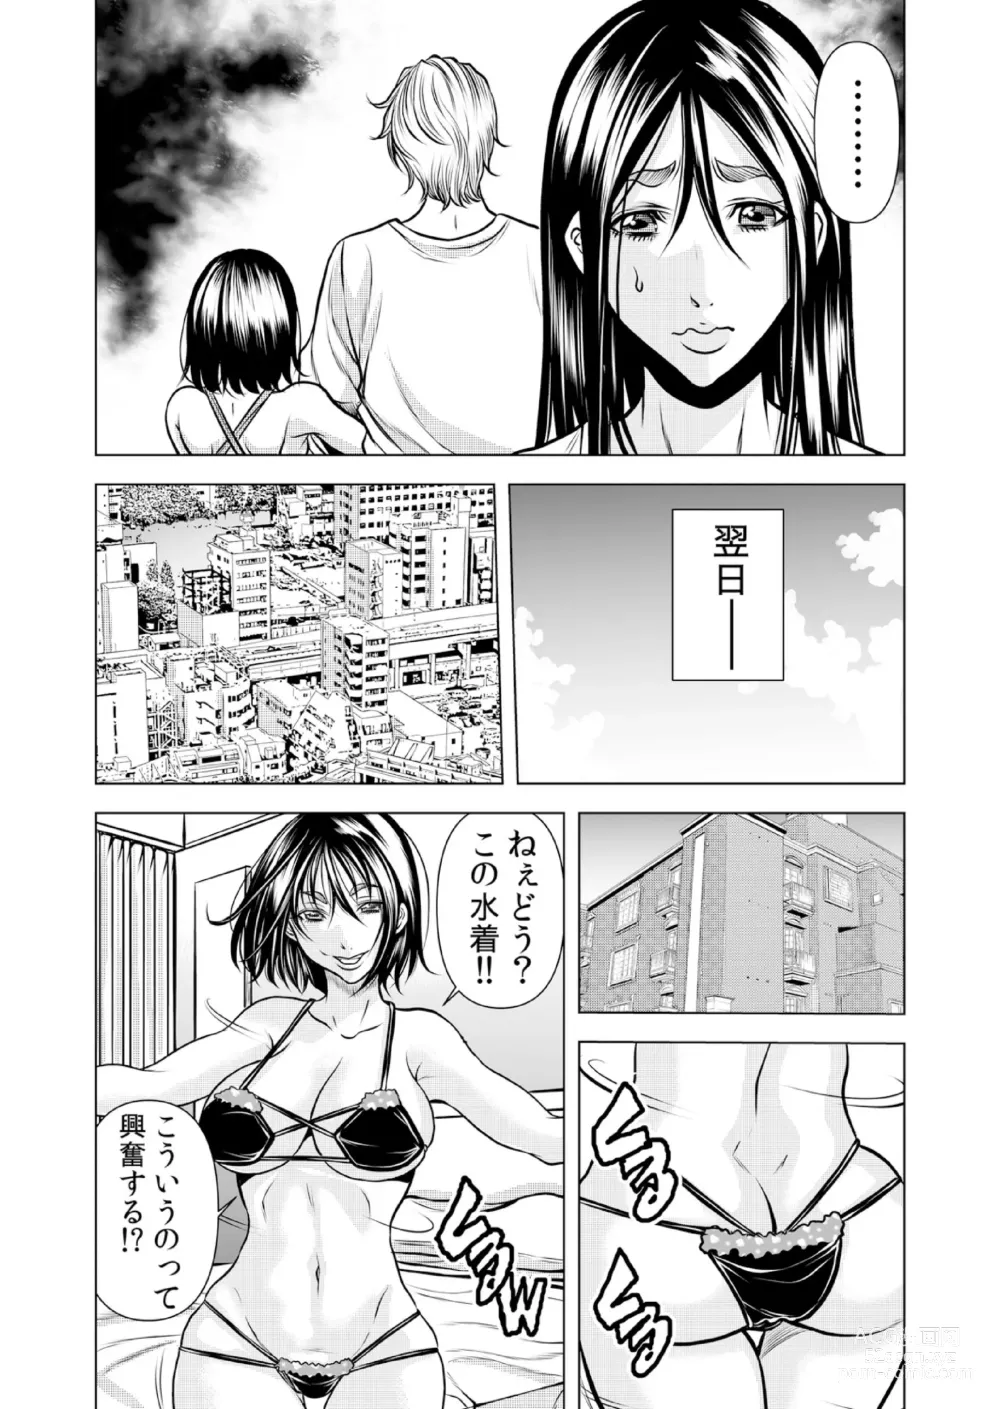 Page 3 of manga Mamasan,yobai ha OK desuka? VOL11